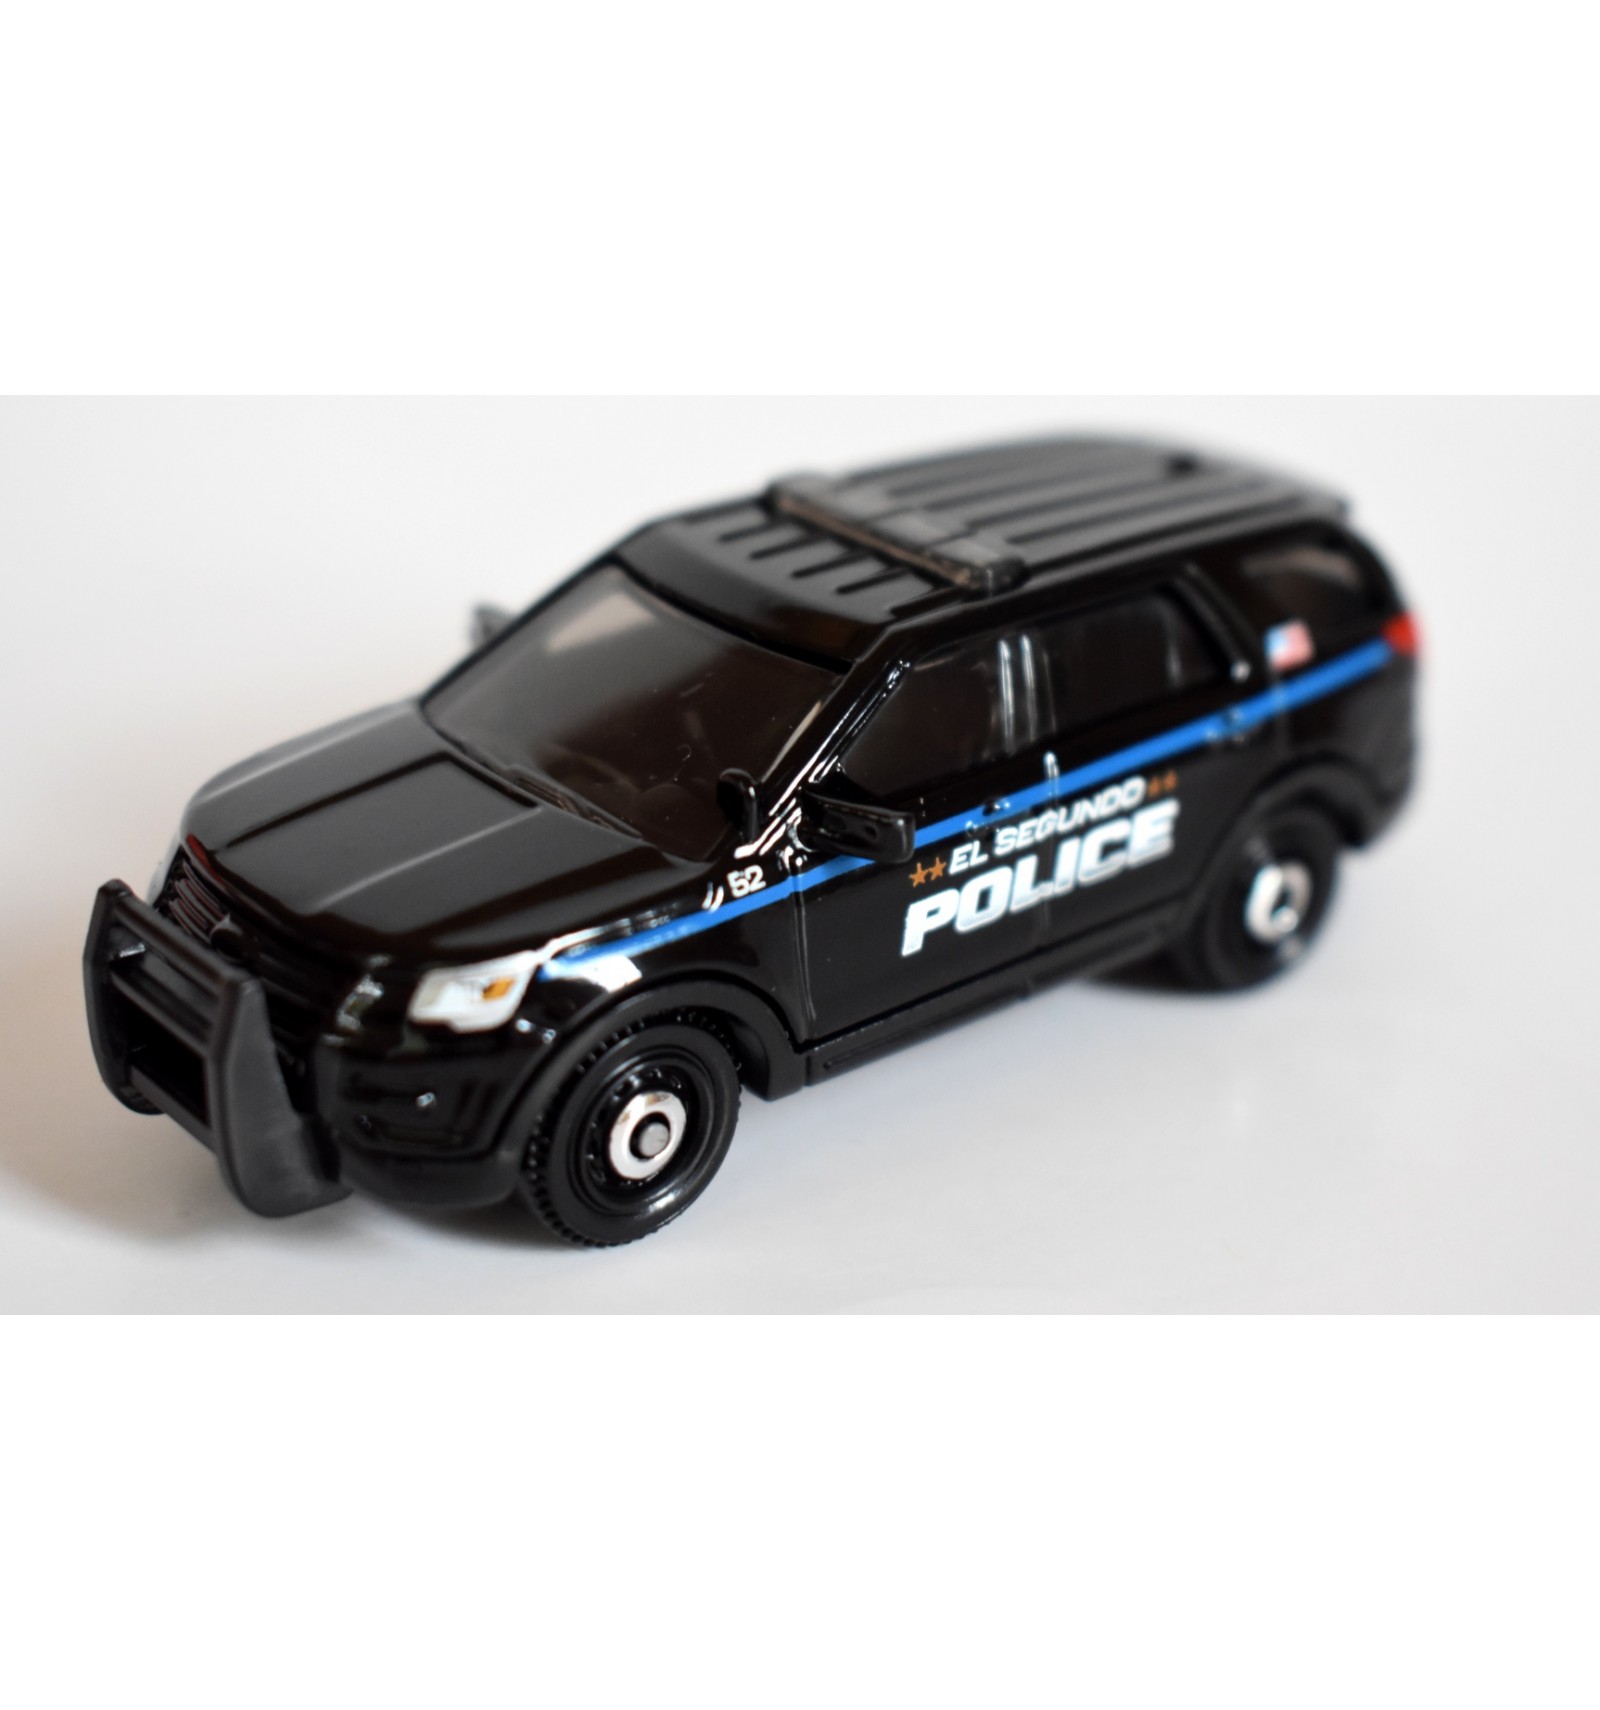 Matchbox - El Segundo CA Police Ford Interceptor Utility - Global Diecast  Direct